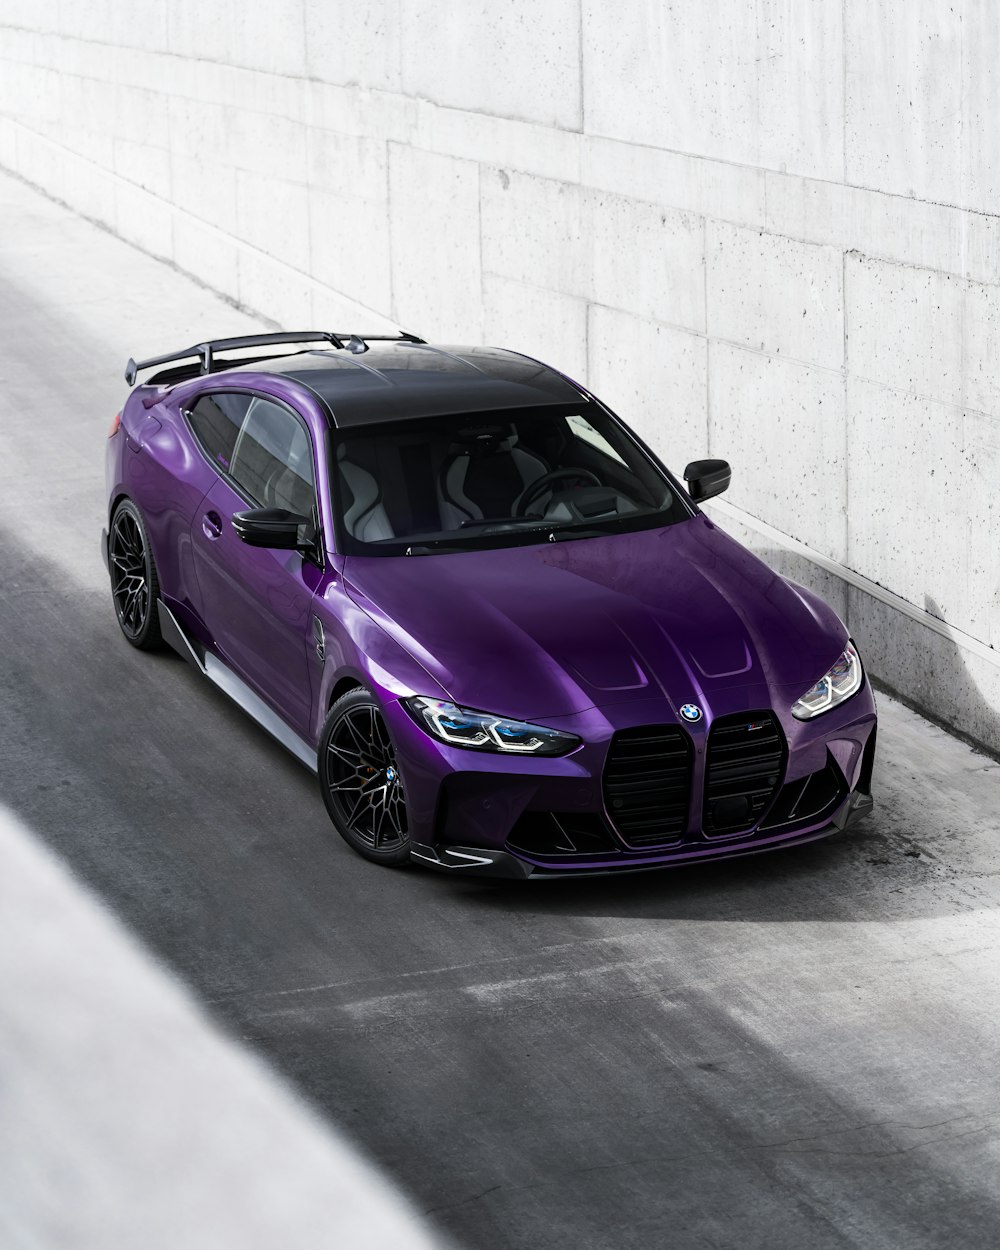 a purple sports car driving down a road